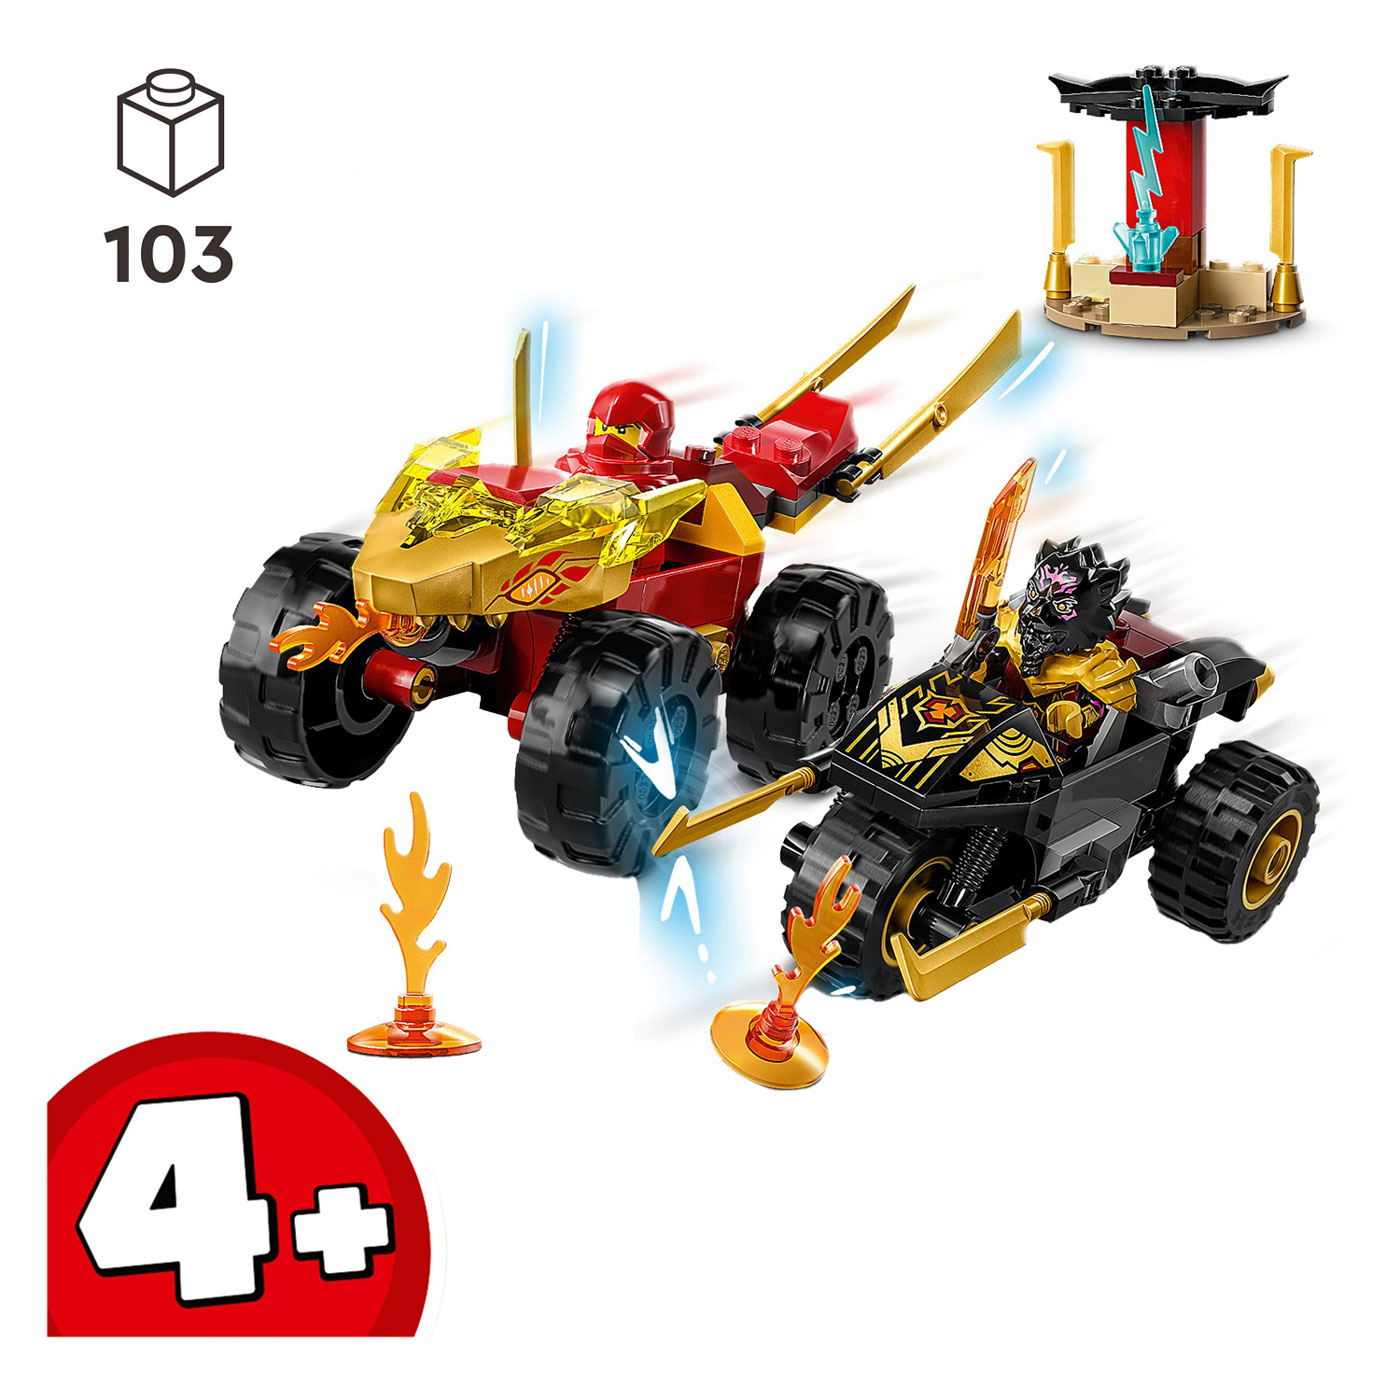 LEGO Ninjago 71789 Kai en Ras' Duel Tussen Auto en Motor